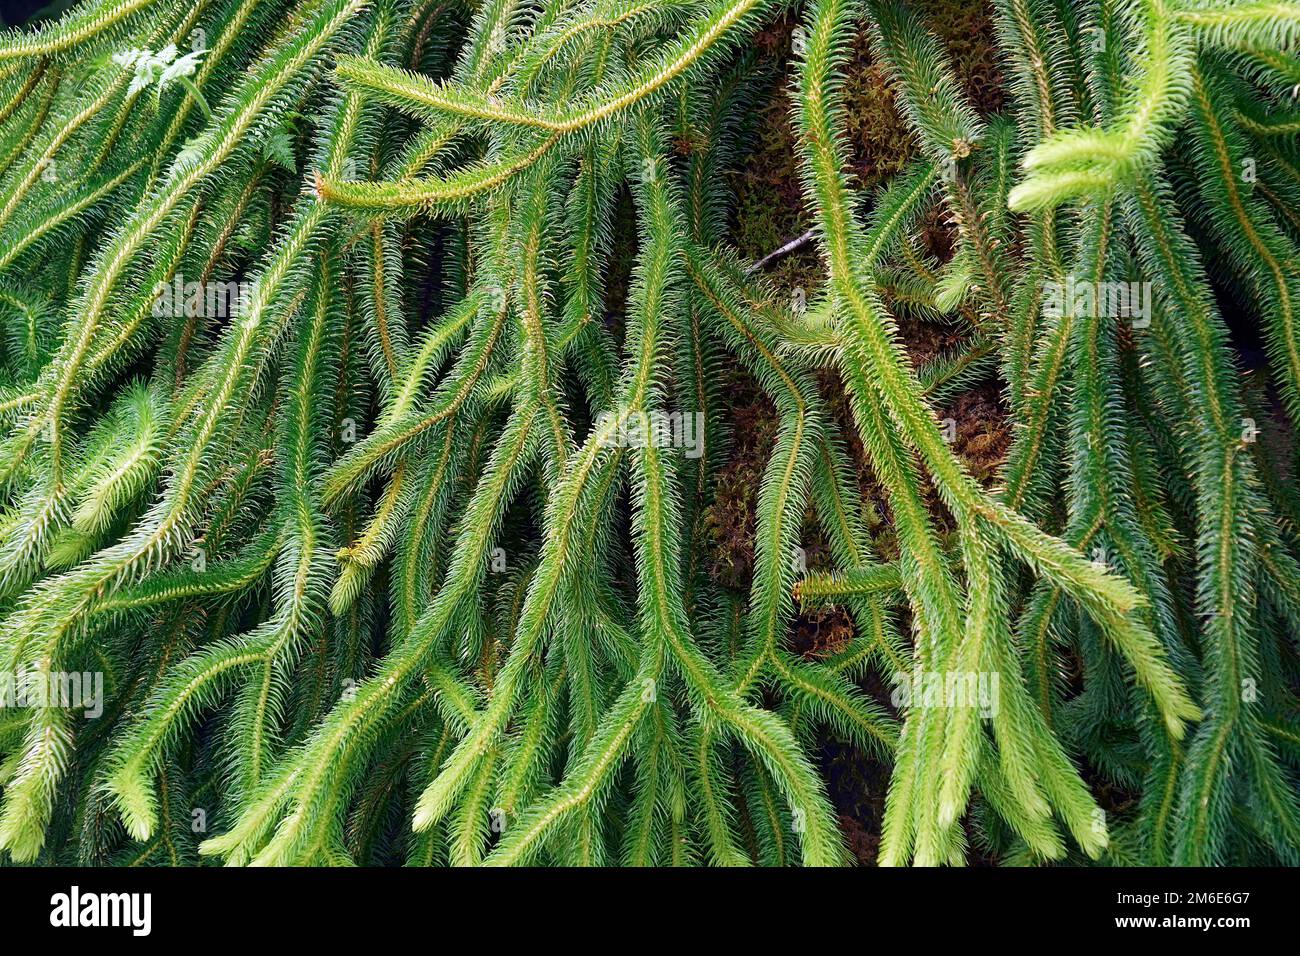 Closeup image of Rock tassel fern Stock Photo